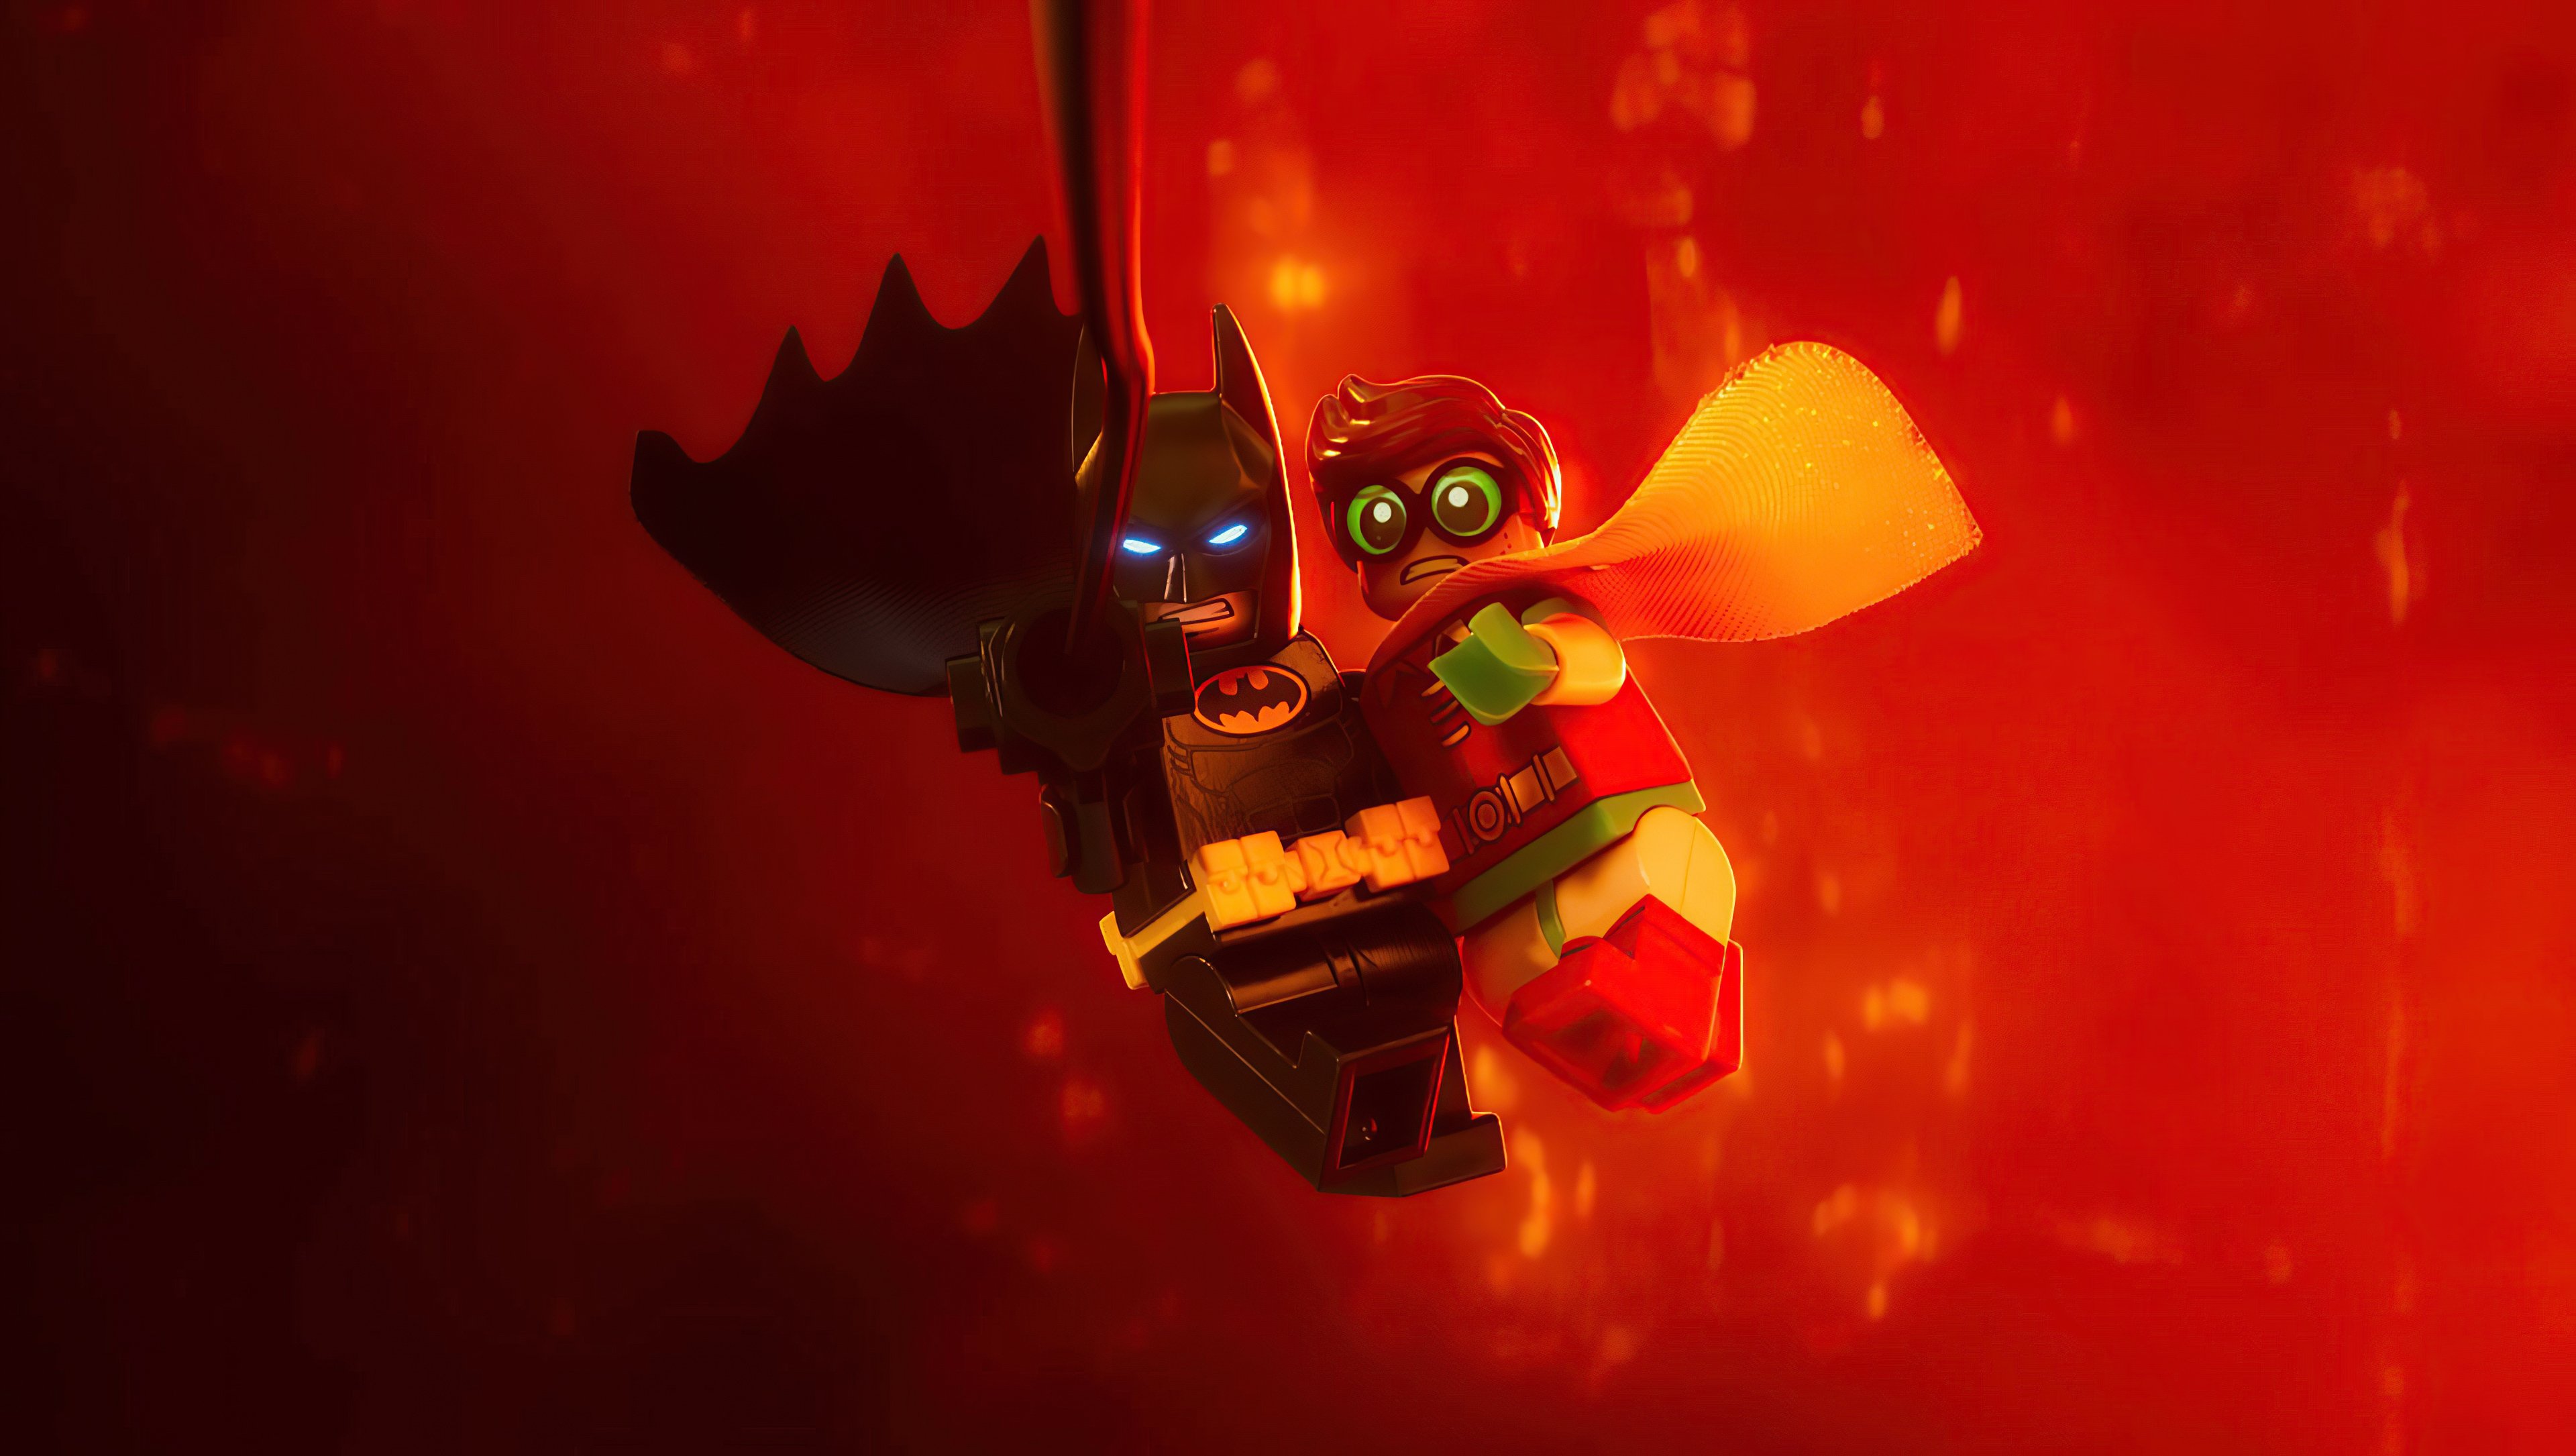 Wallpaper Batman and Robin Lego style